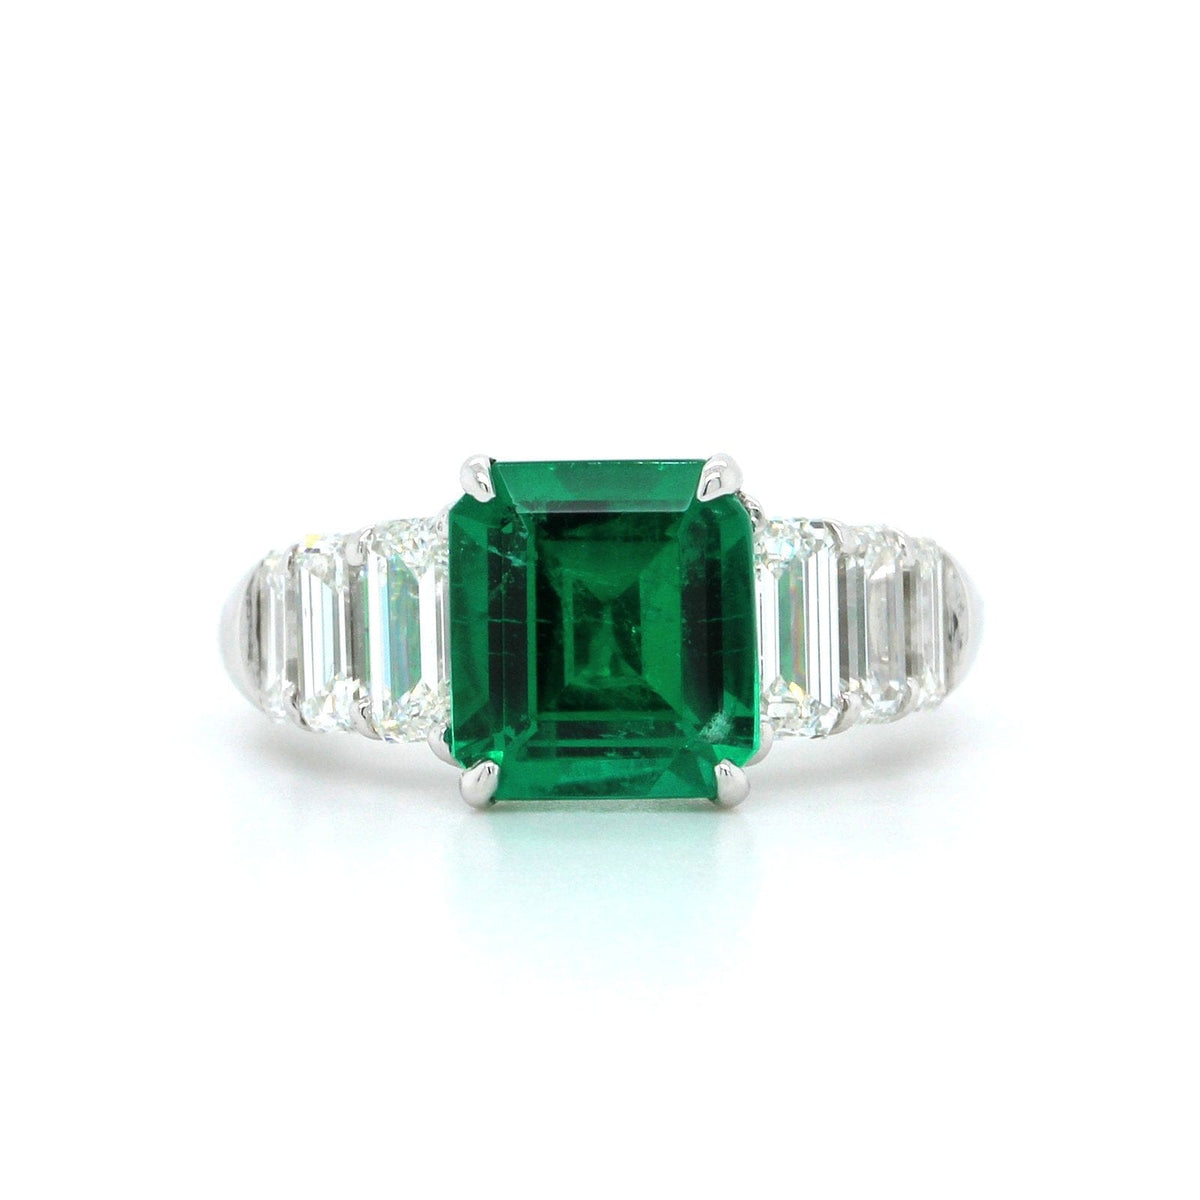 Platinum Emerald Ring with Emerald Cut Diamond Sides, Platinum, Long's Jewelers